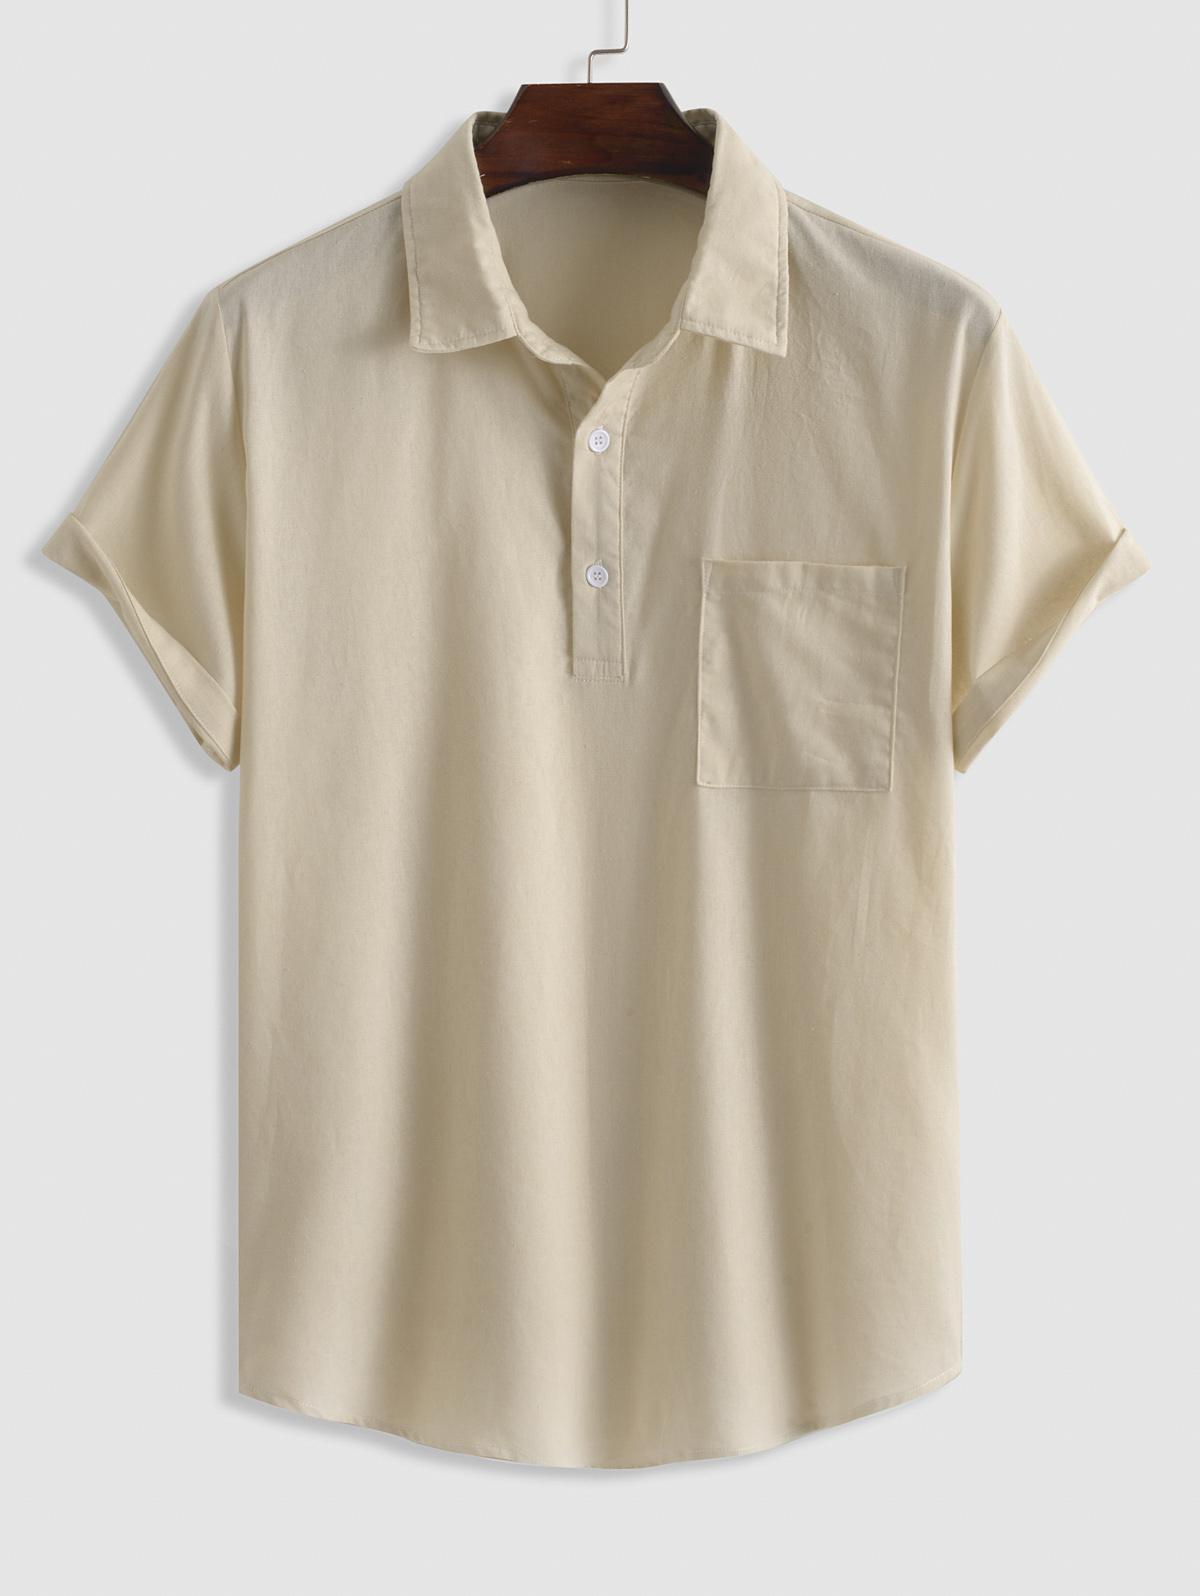 ZAFUL Men's ZAFUL Half Button Plain Short Sleeves Collared Popover Shirt L Light coffee